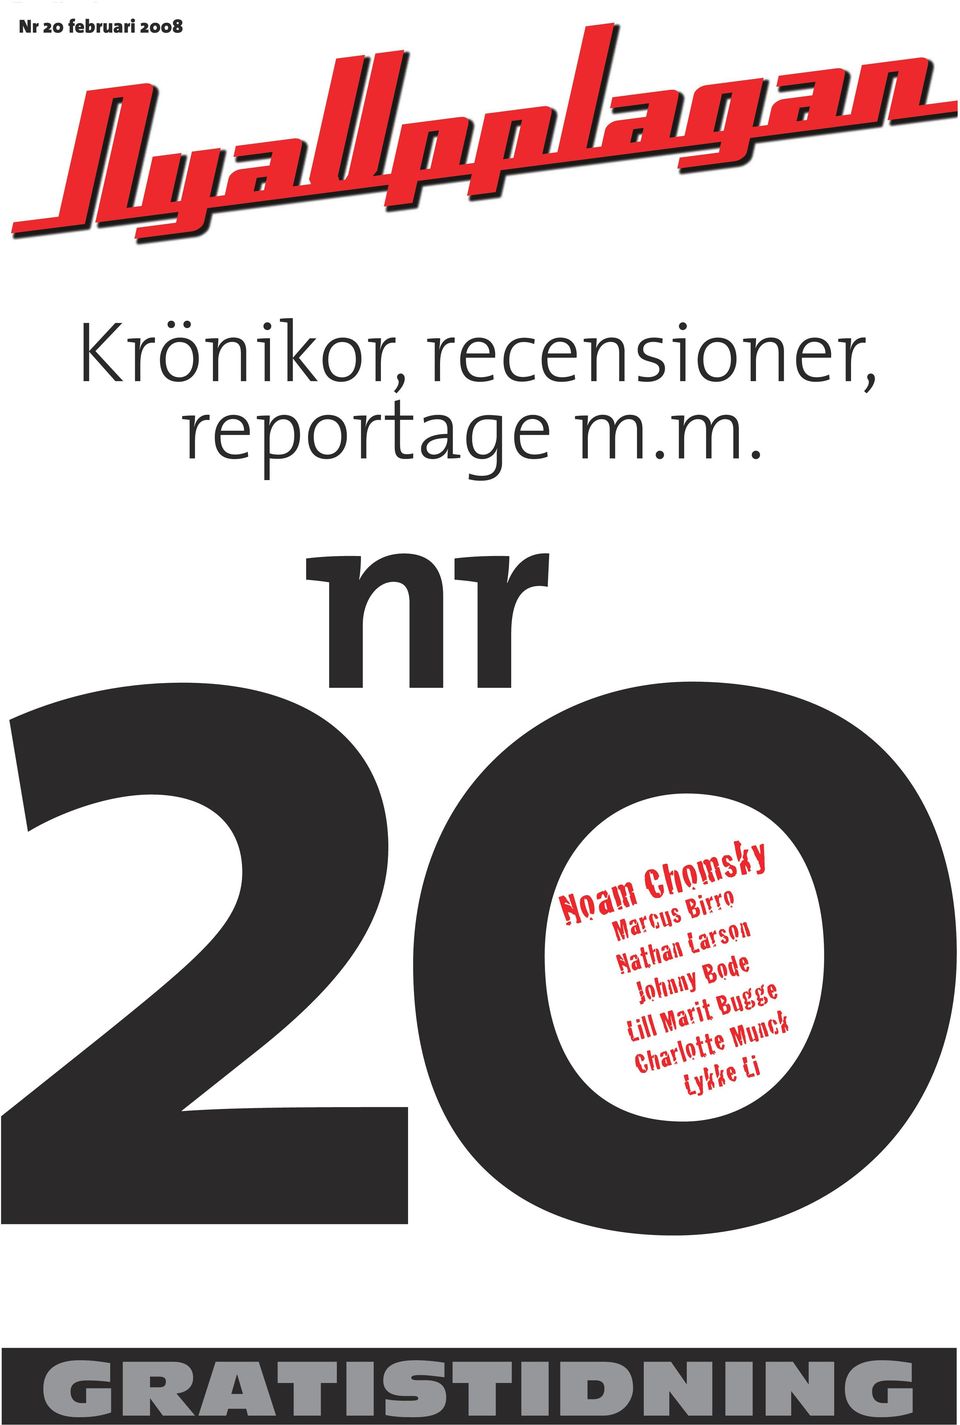 Krönikor, recensioner, reportage m.m.